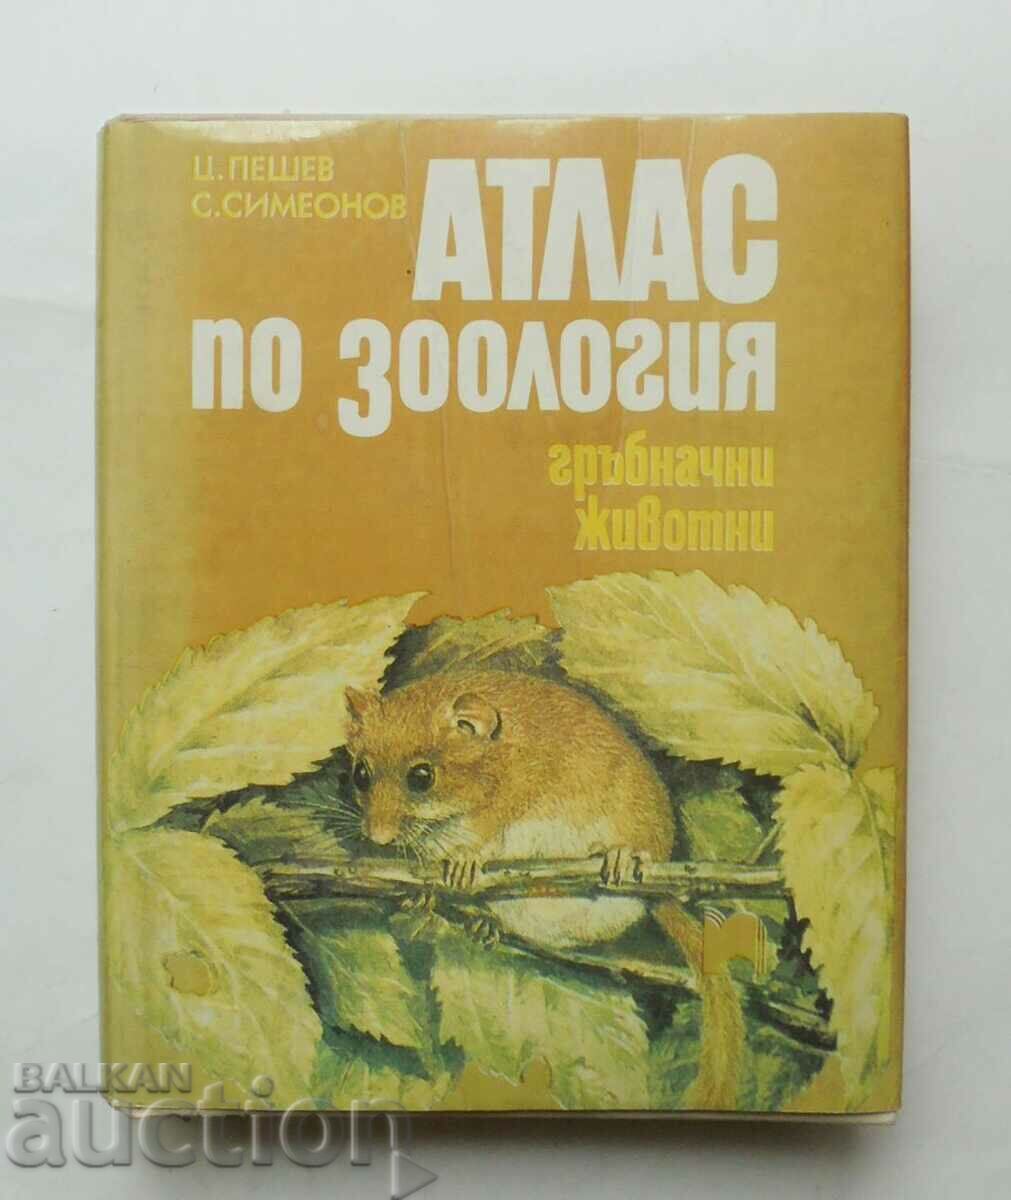 Atlas of Zoology: Vertebrates - Tsolo Peshev 1993.